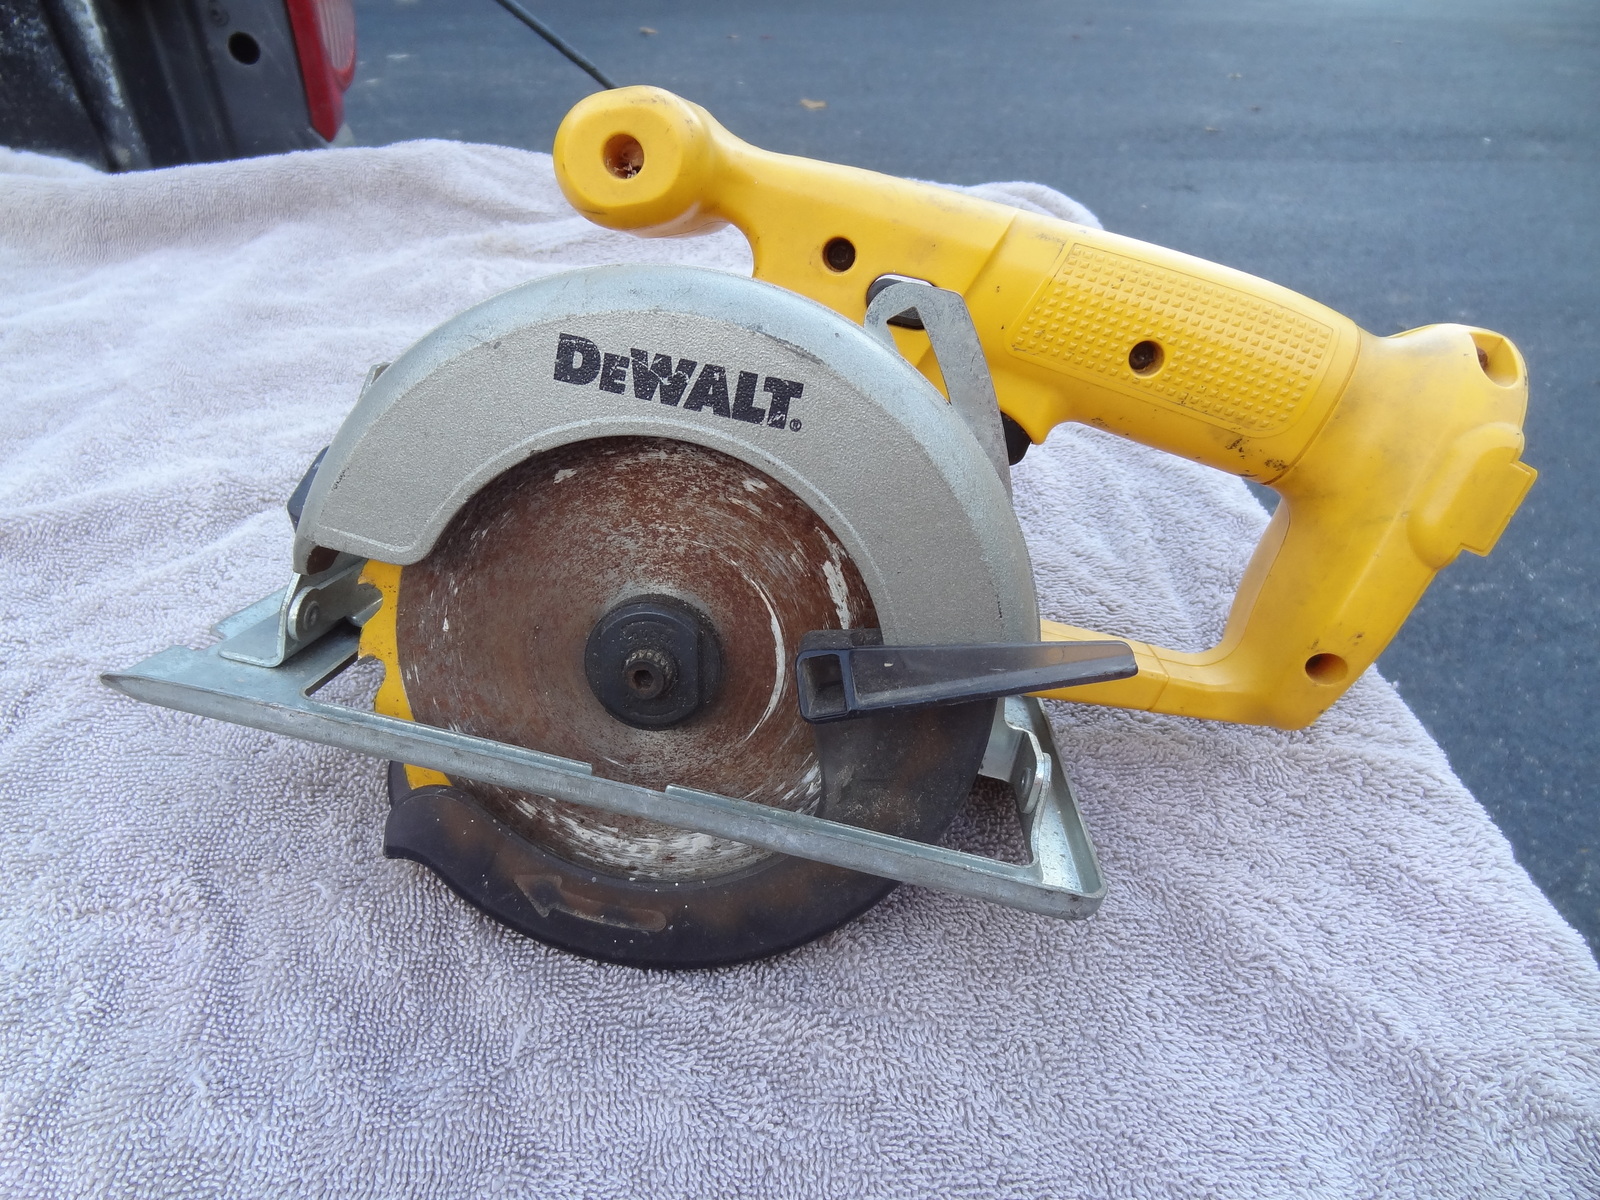 Dewalt DW935 Cordless Circular Saw 1/4" and 50 similar items